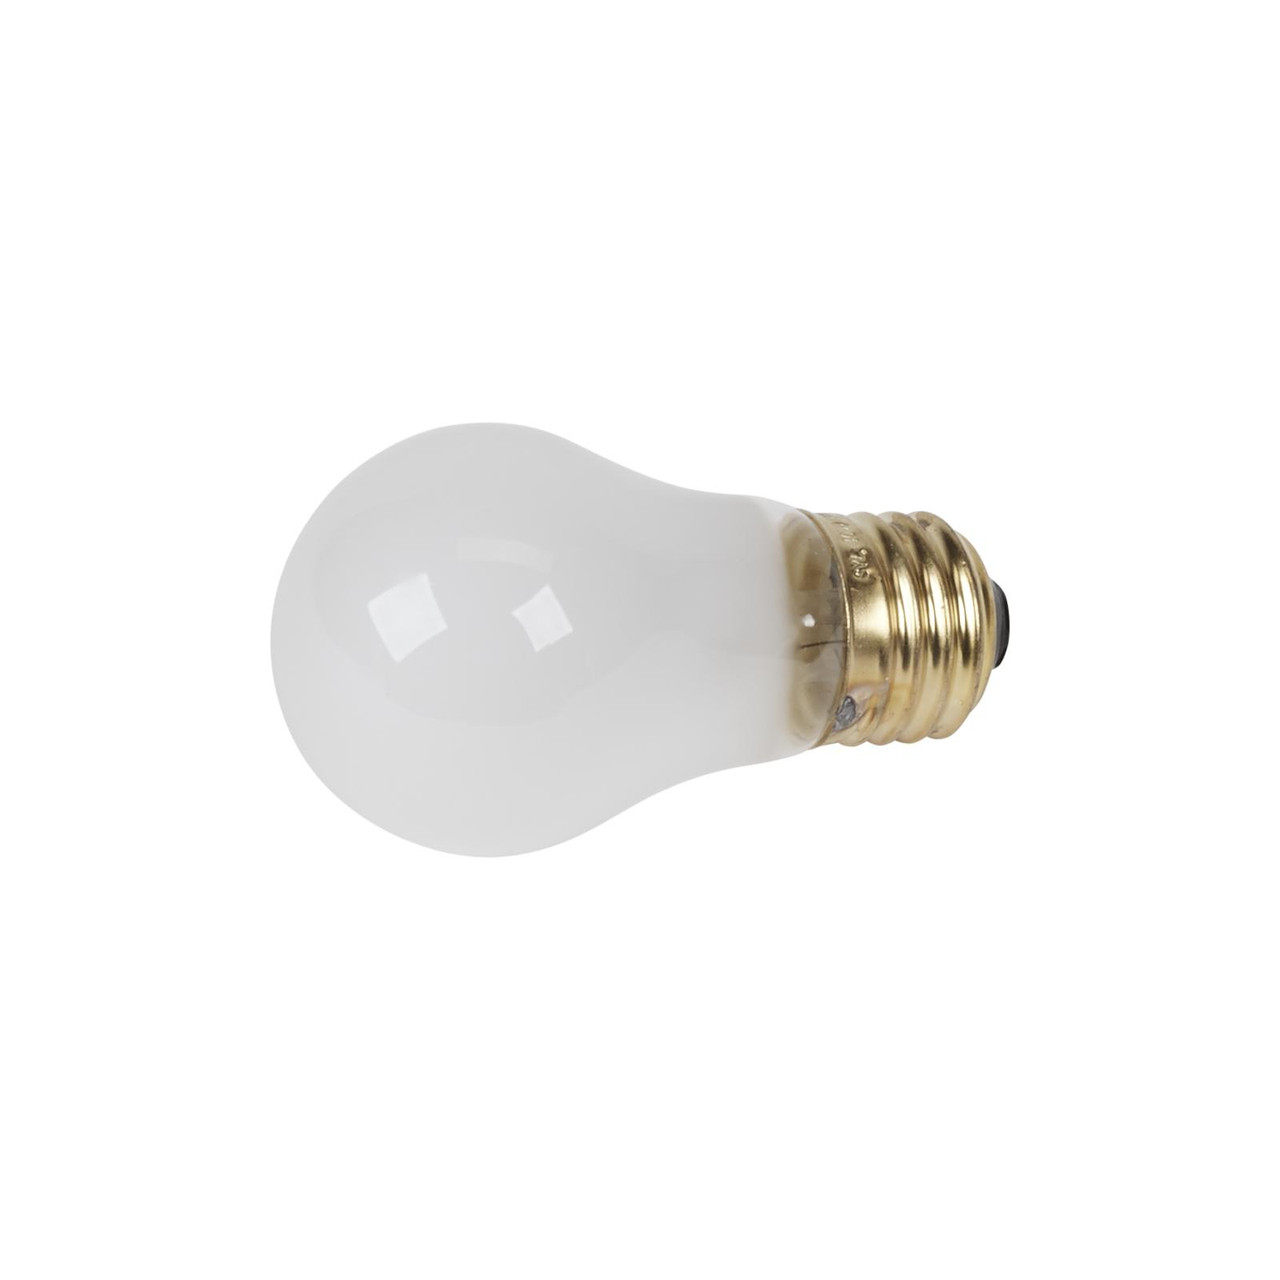 Whirlpool W11338583 Refrigerator LED Light Bulb